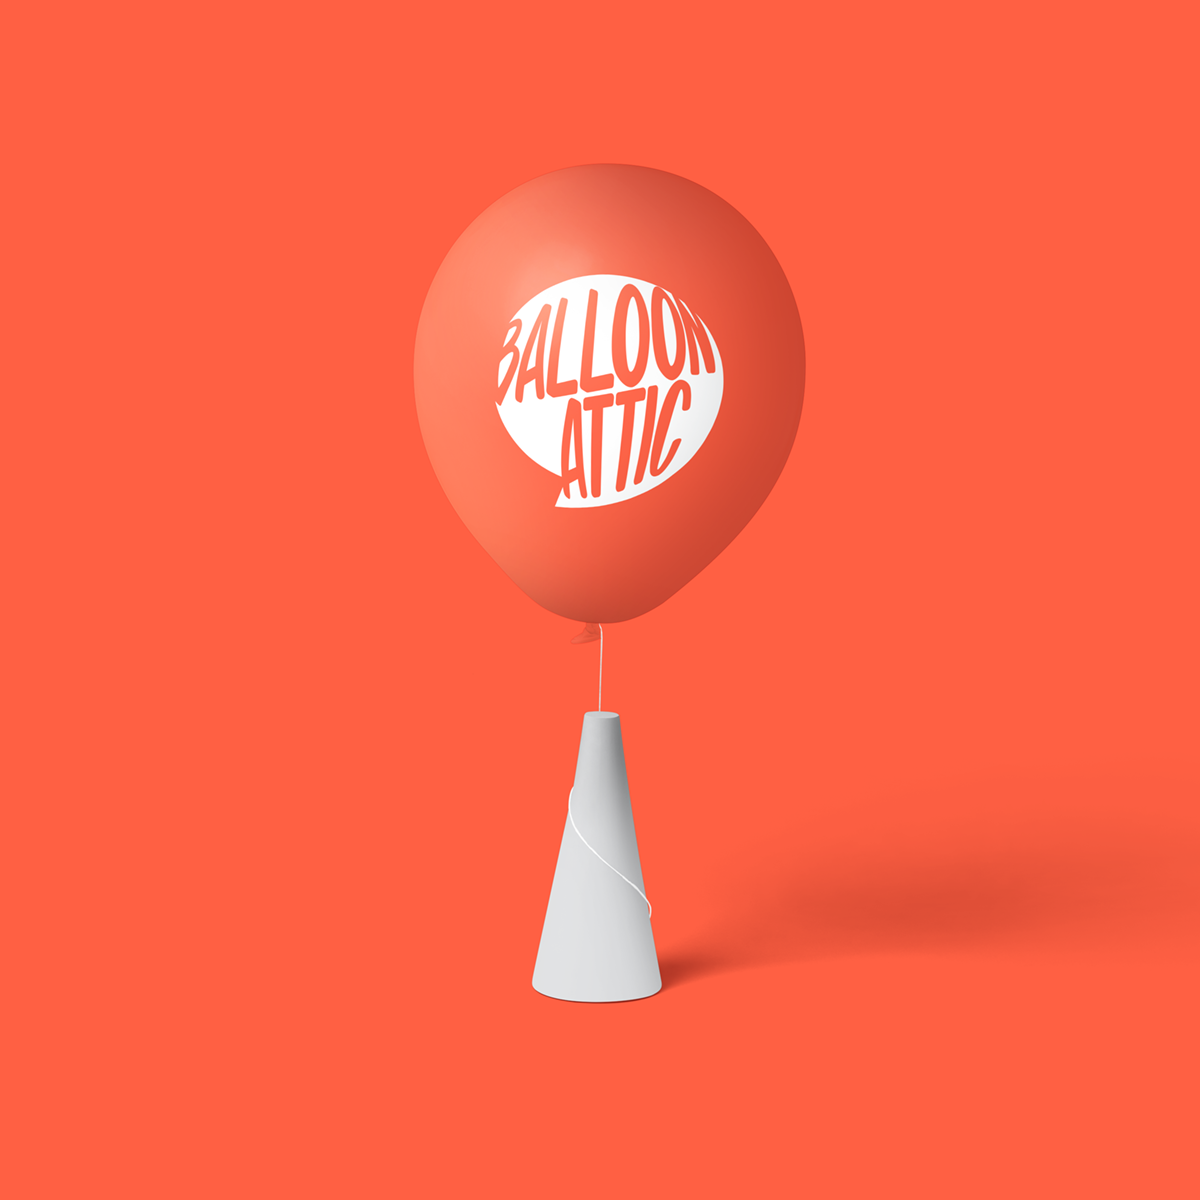 Balloon Attic final brand design on an orange balloon.